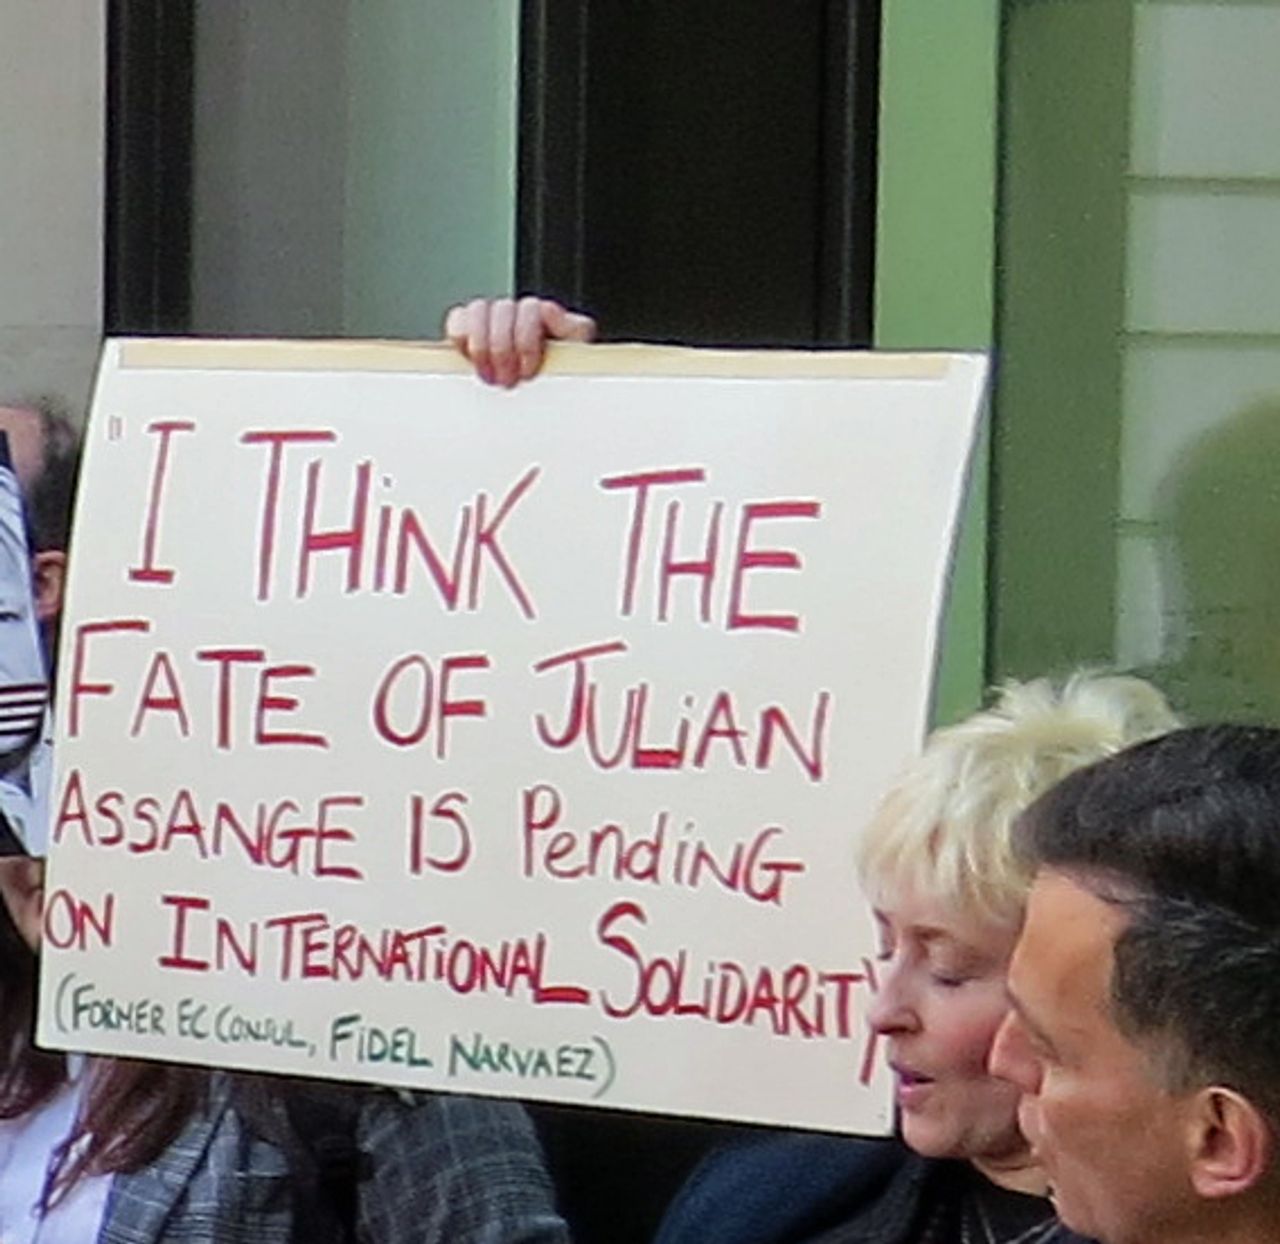 Christine holding international solidarity banner